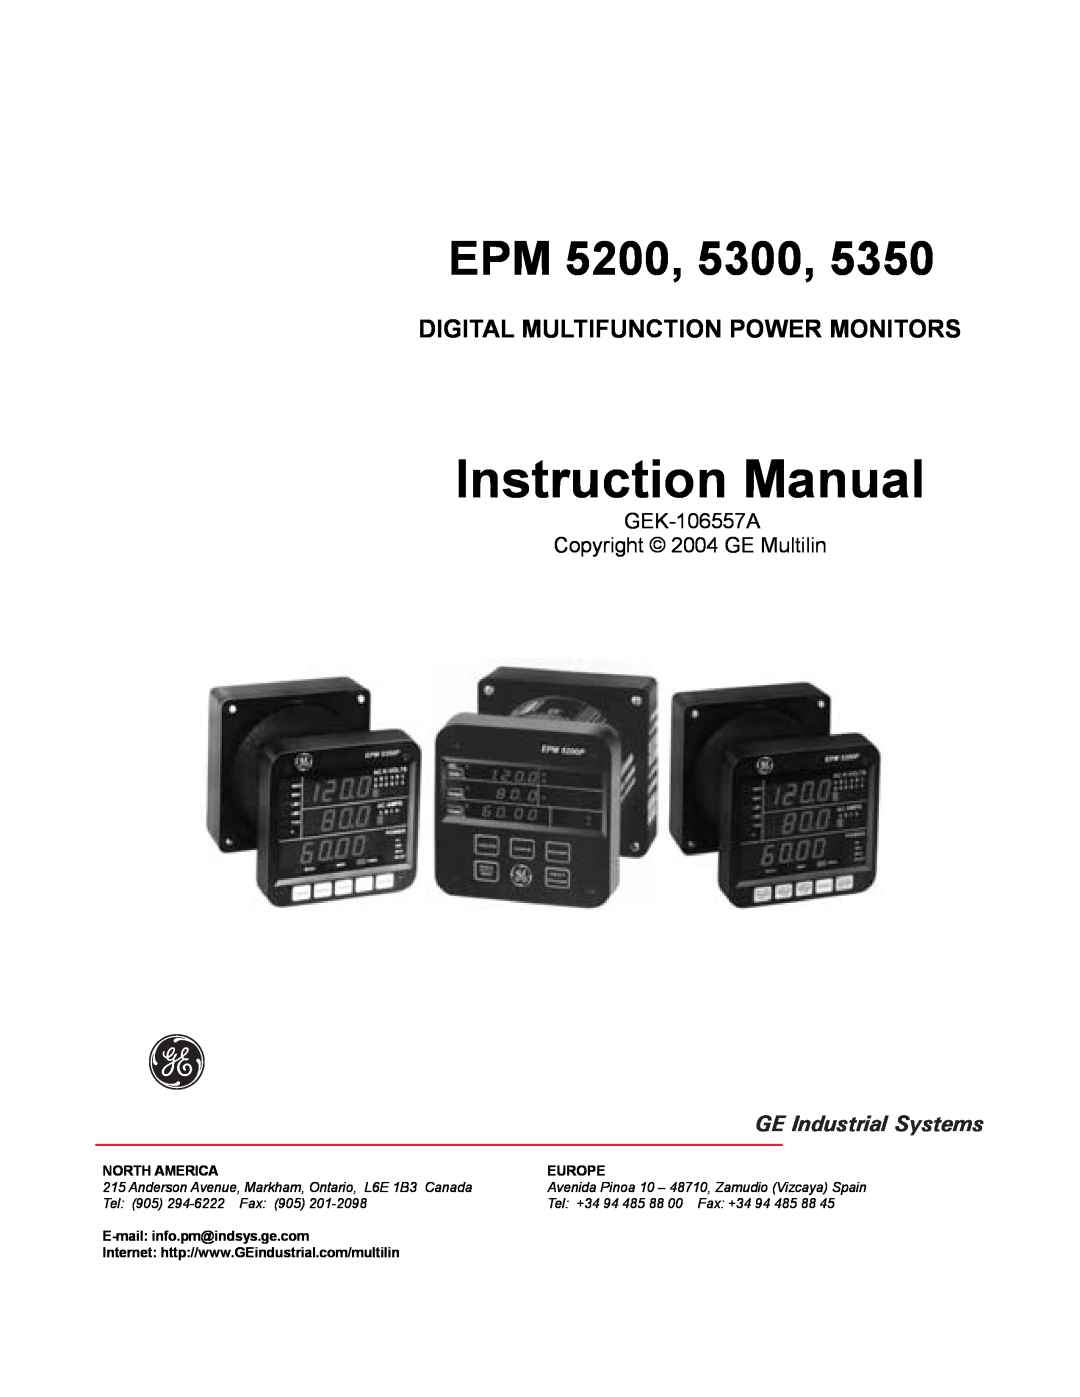 GE EPM 5300 instruction manual Digital Multifunction Power Monitors, GEK-106557A Copyright 2004 GE Multilin, North America 